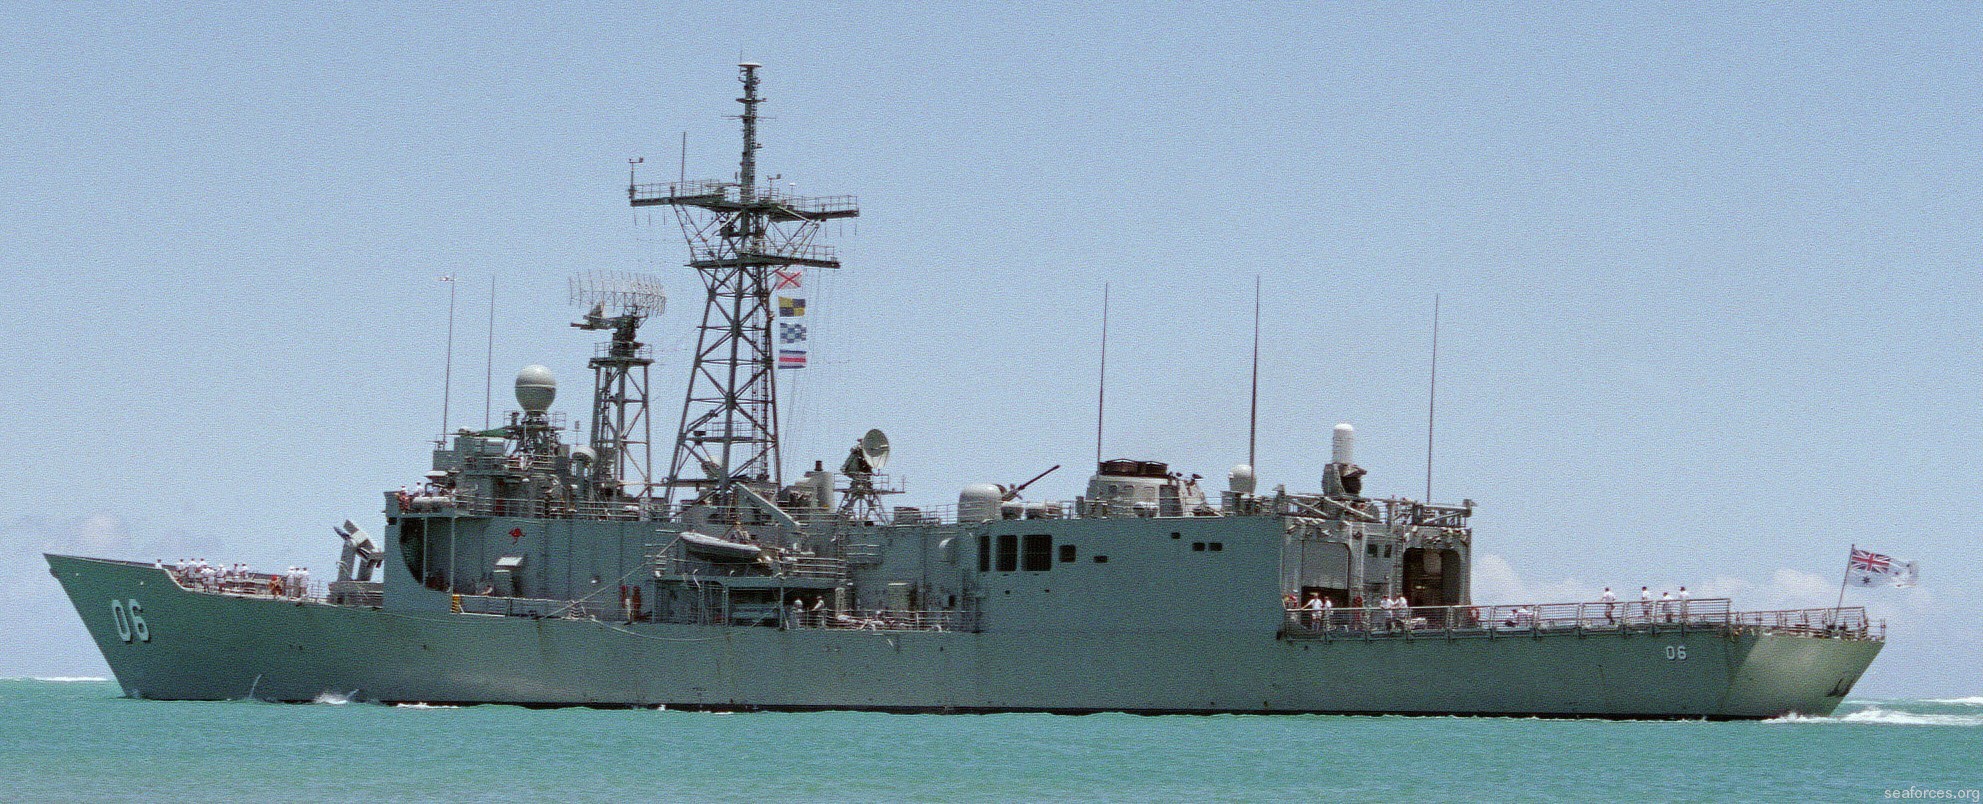 ffg-06 hmas newcastle adelaide class frigate royal australian navy 2000 26 pearl harbor rimpac